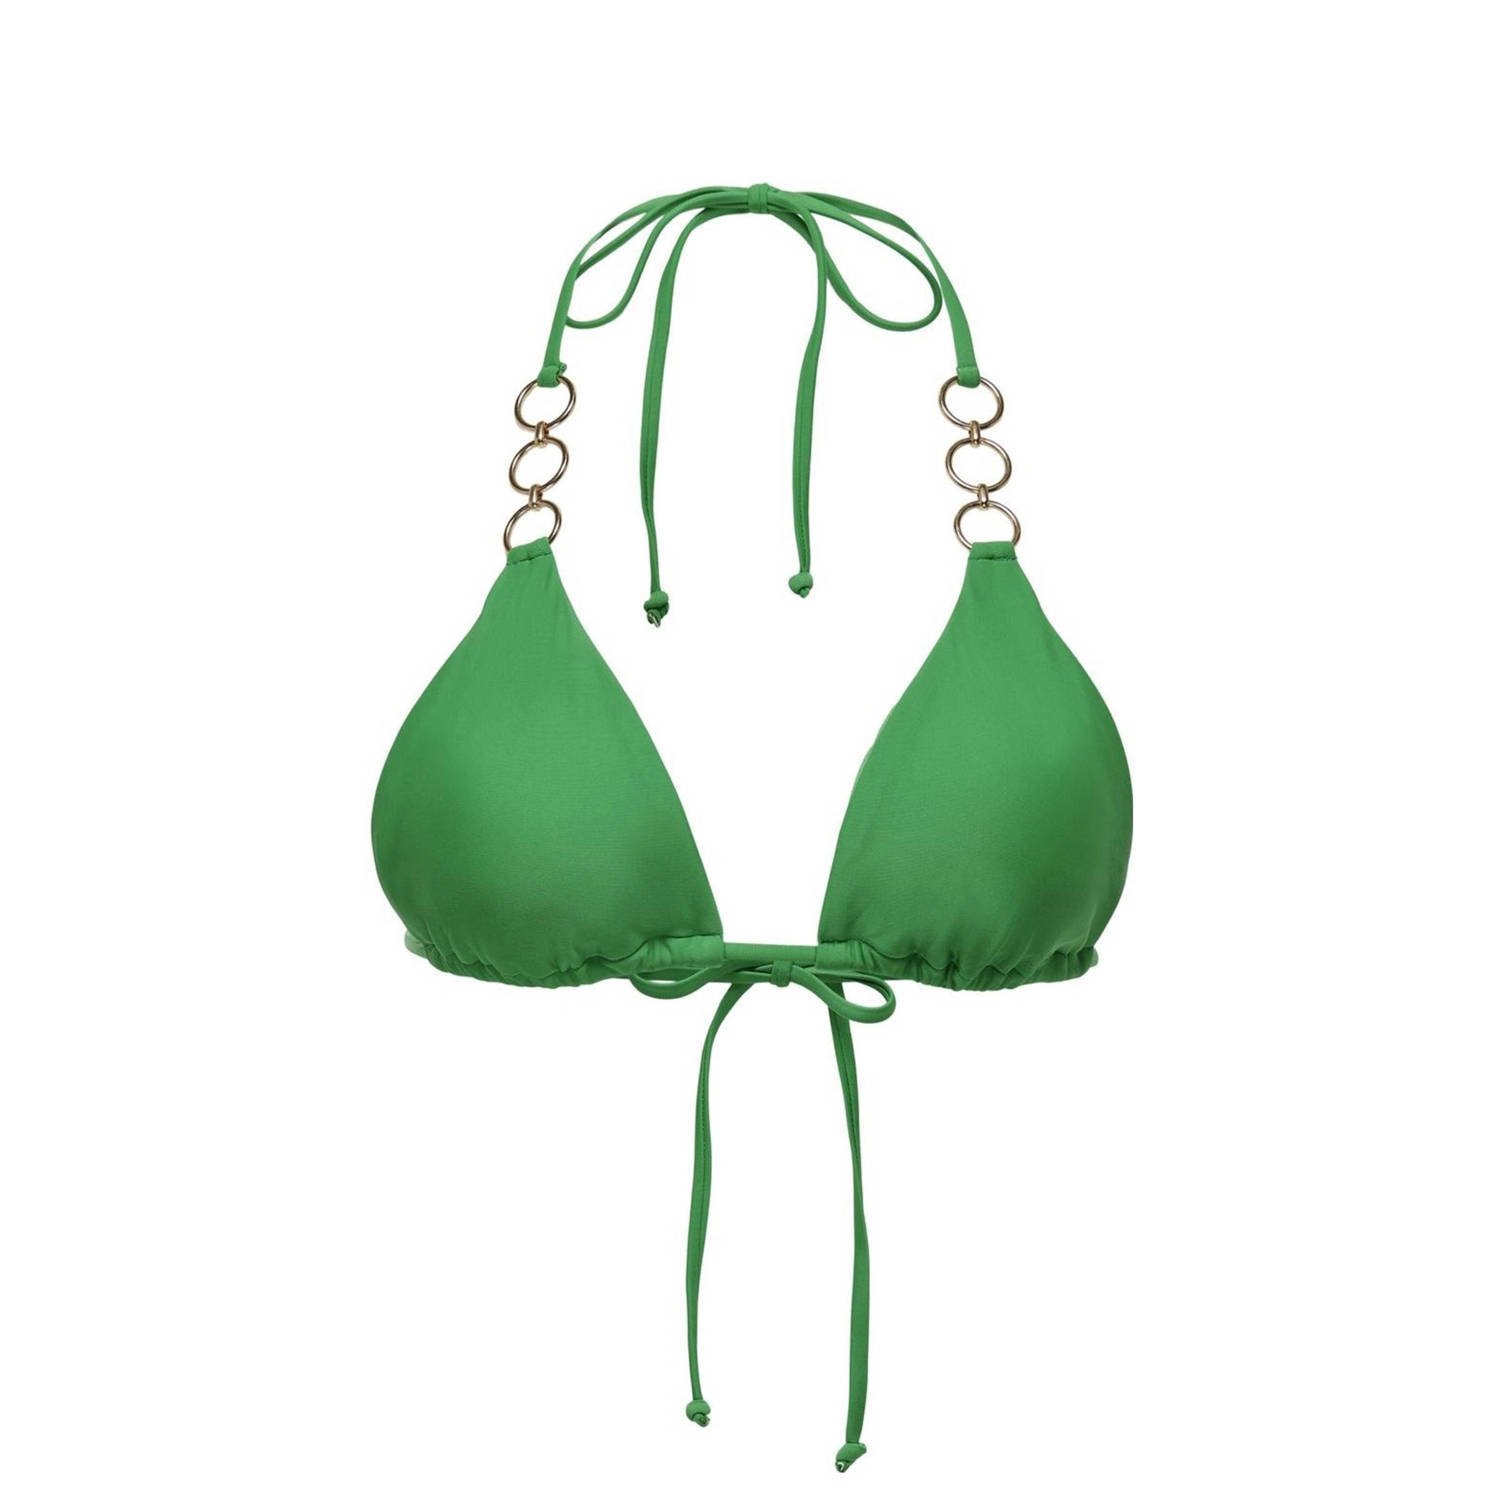 ONLY voorgevormde triangel bikinitop ONLRIO groen